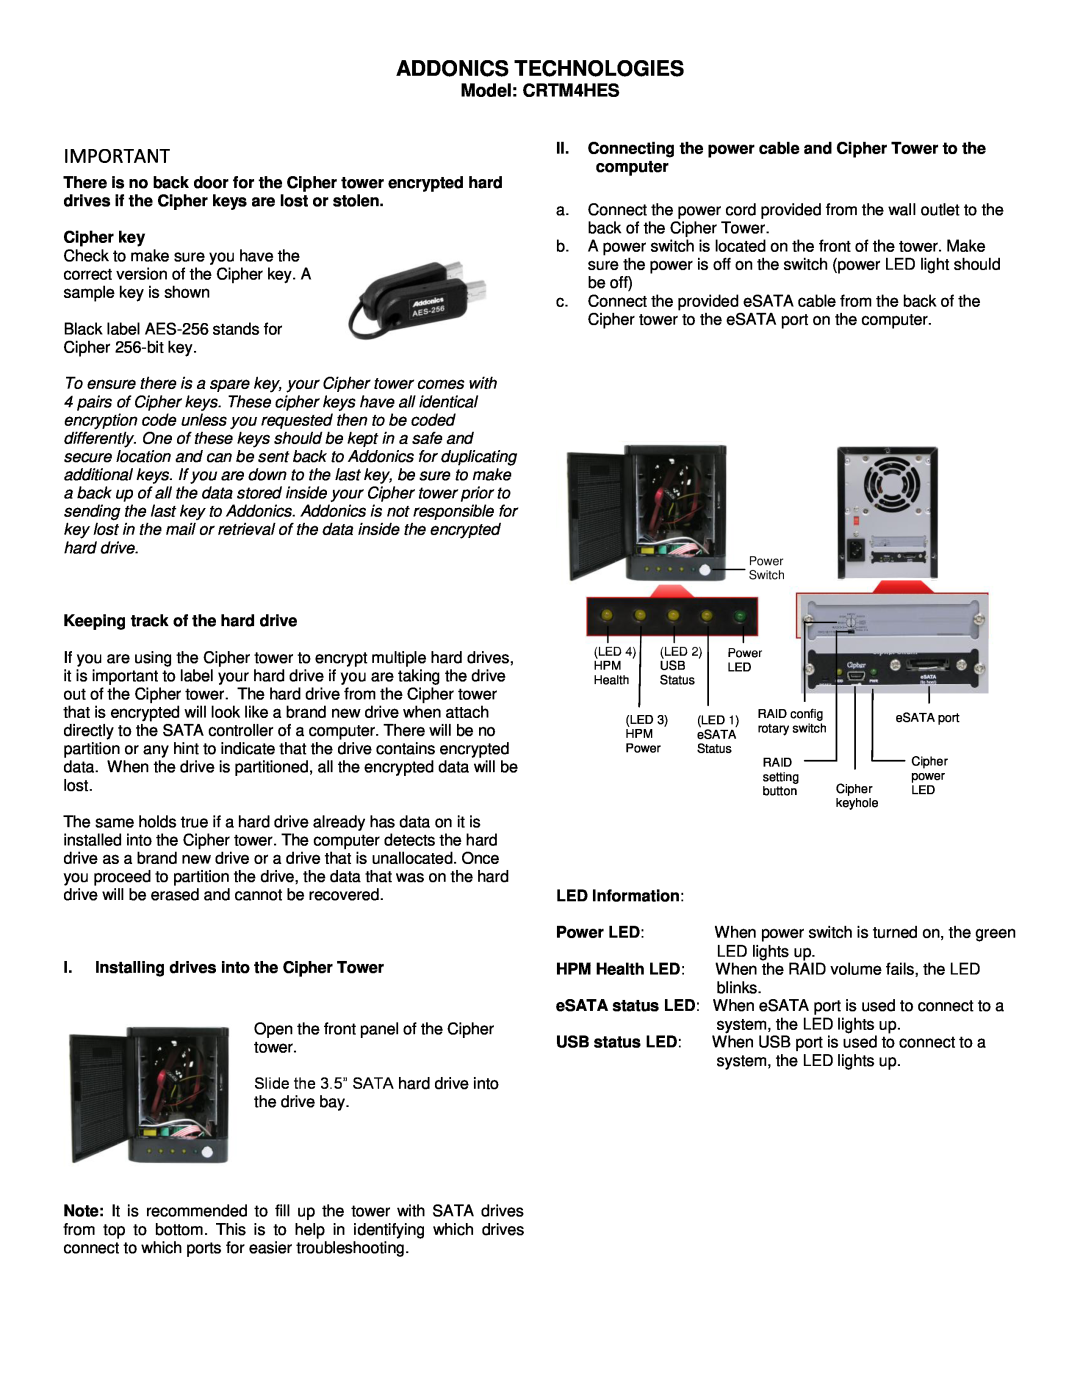 Addonics Technologies manual Addonics Technologies, Model CRTM4HES, Cipher key, Keeping track of the hard drive 